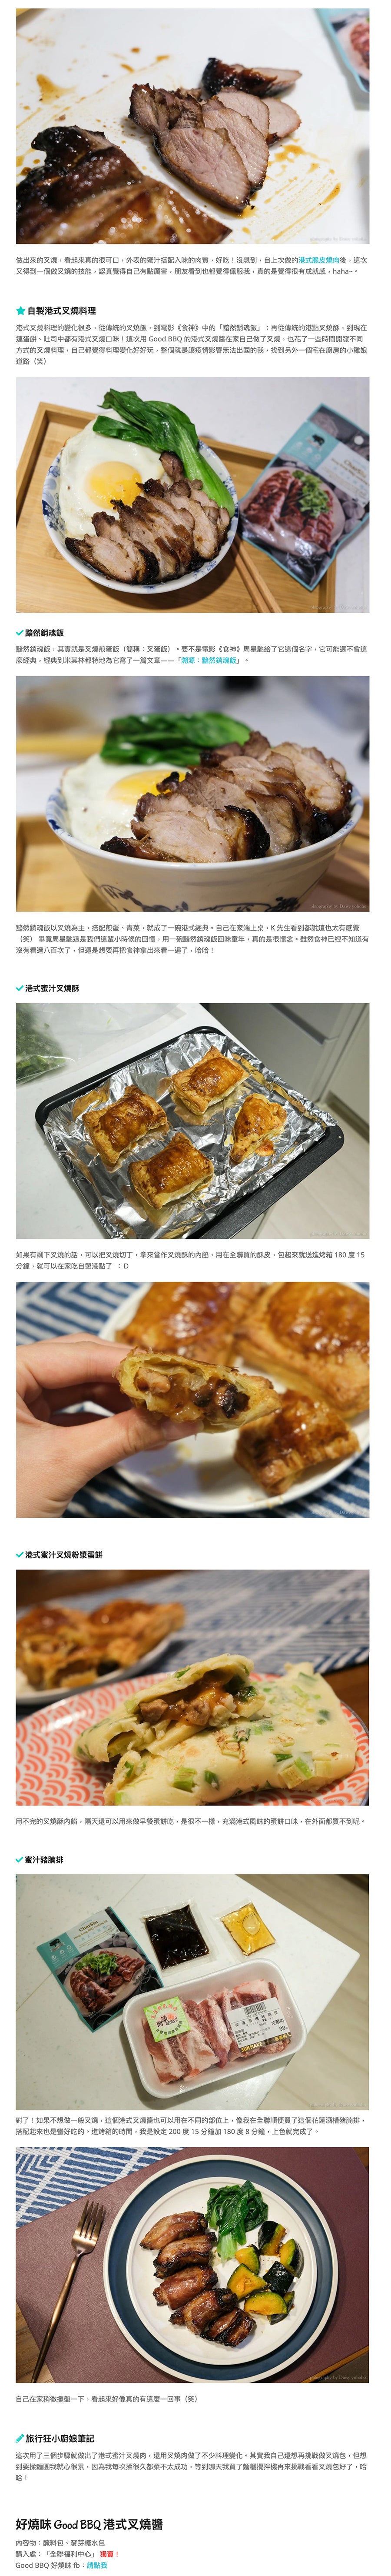 Good BBQ_daisyyohoho_BBQ Cooking Kit_Article_1